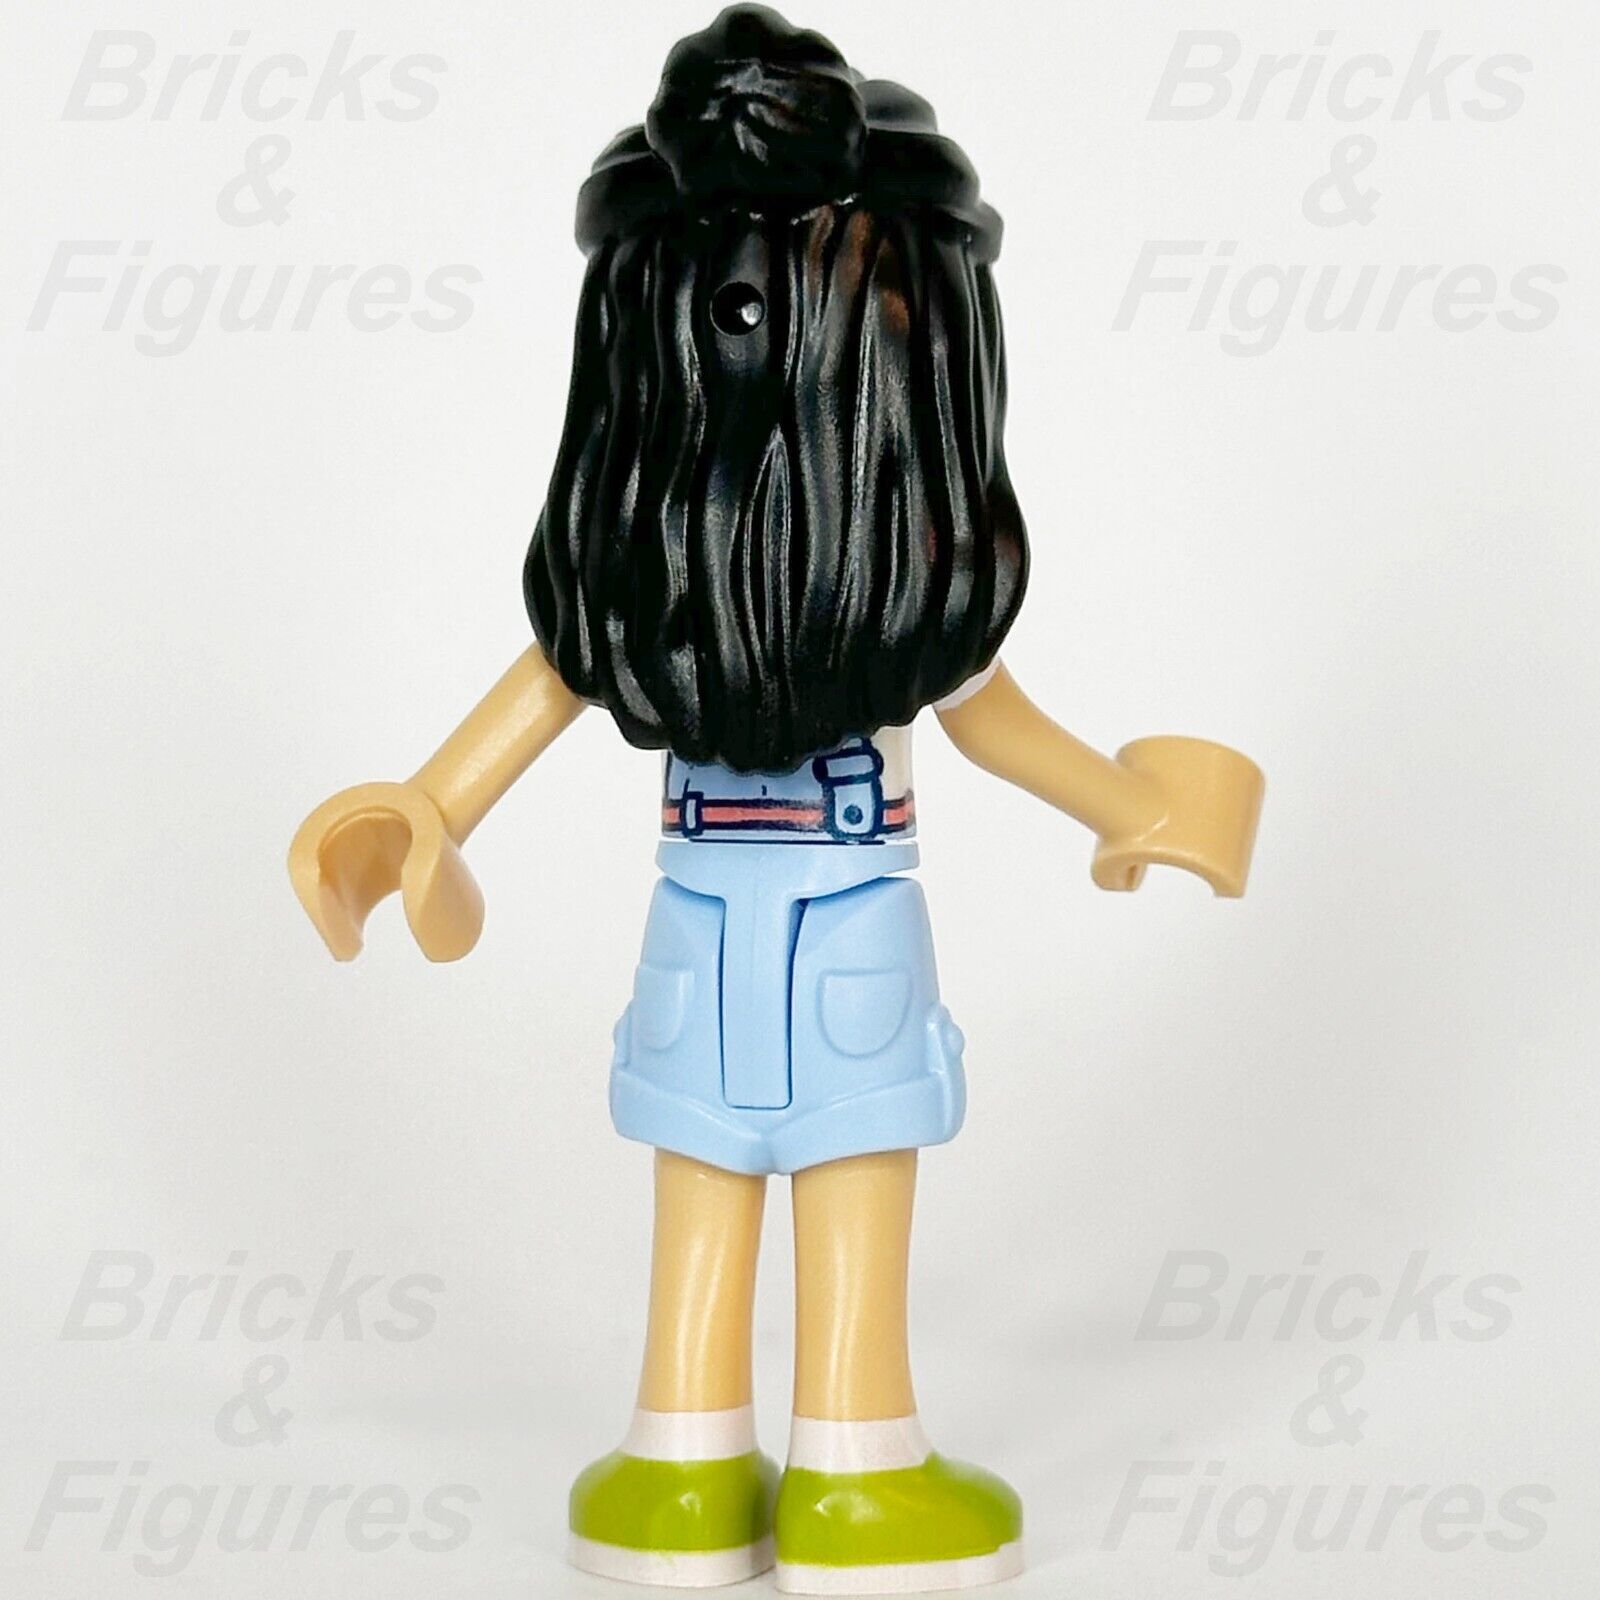 LEGO Friends Liann Minifigure Blue Overalls Paint Marks Lime Shoes 41739 frnd600 - Bricks & Figures